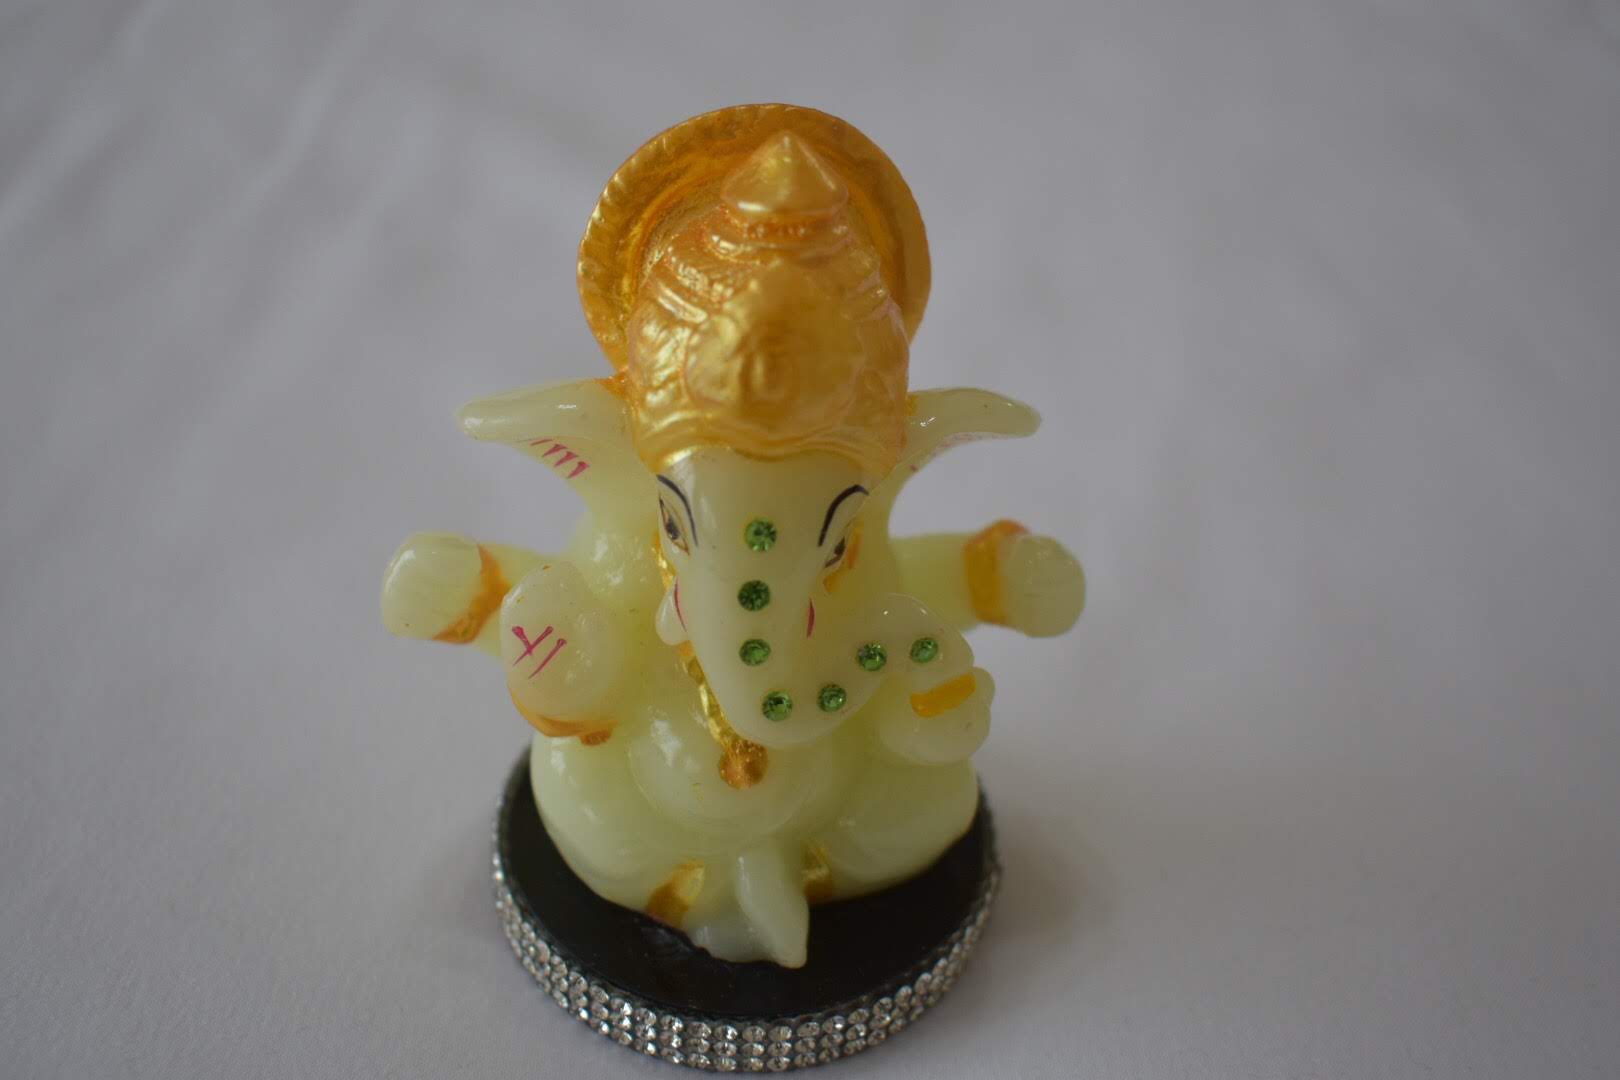 Light Green Color - Lord Ganesha Figurine with Jewel studded platform - Porcelain Fibre Glass - Home Decor